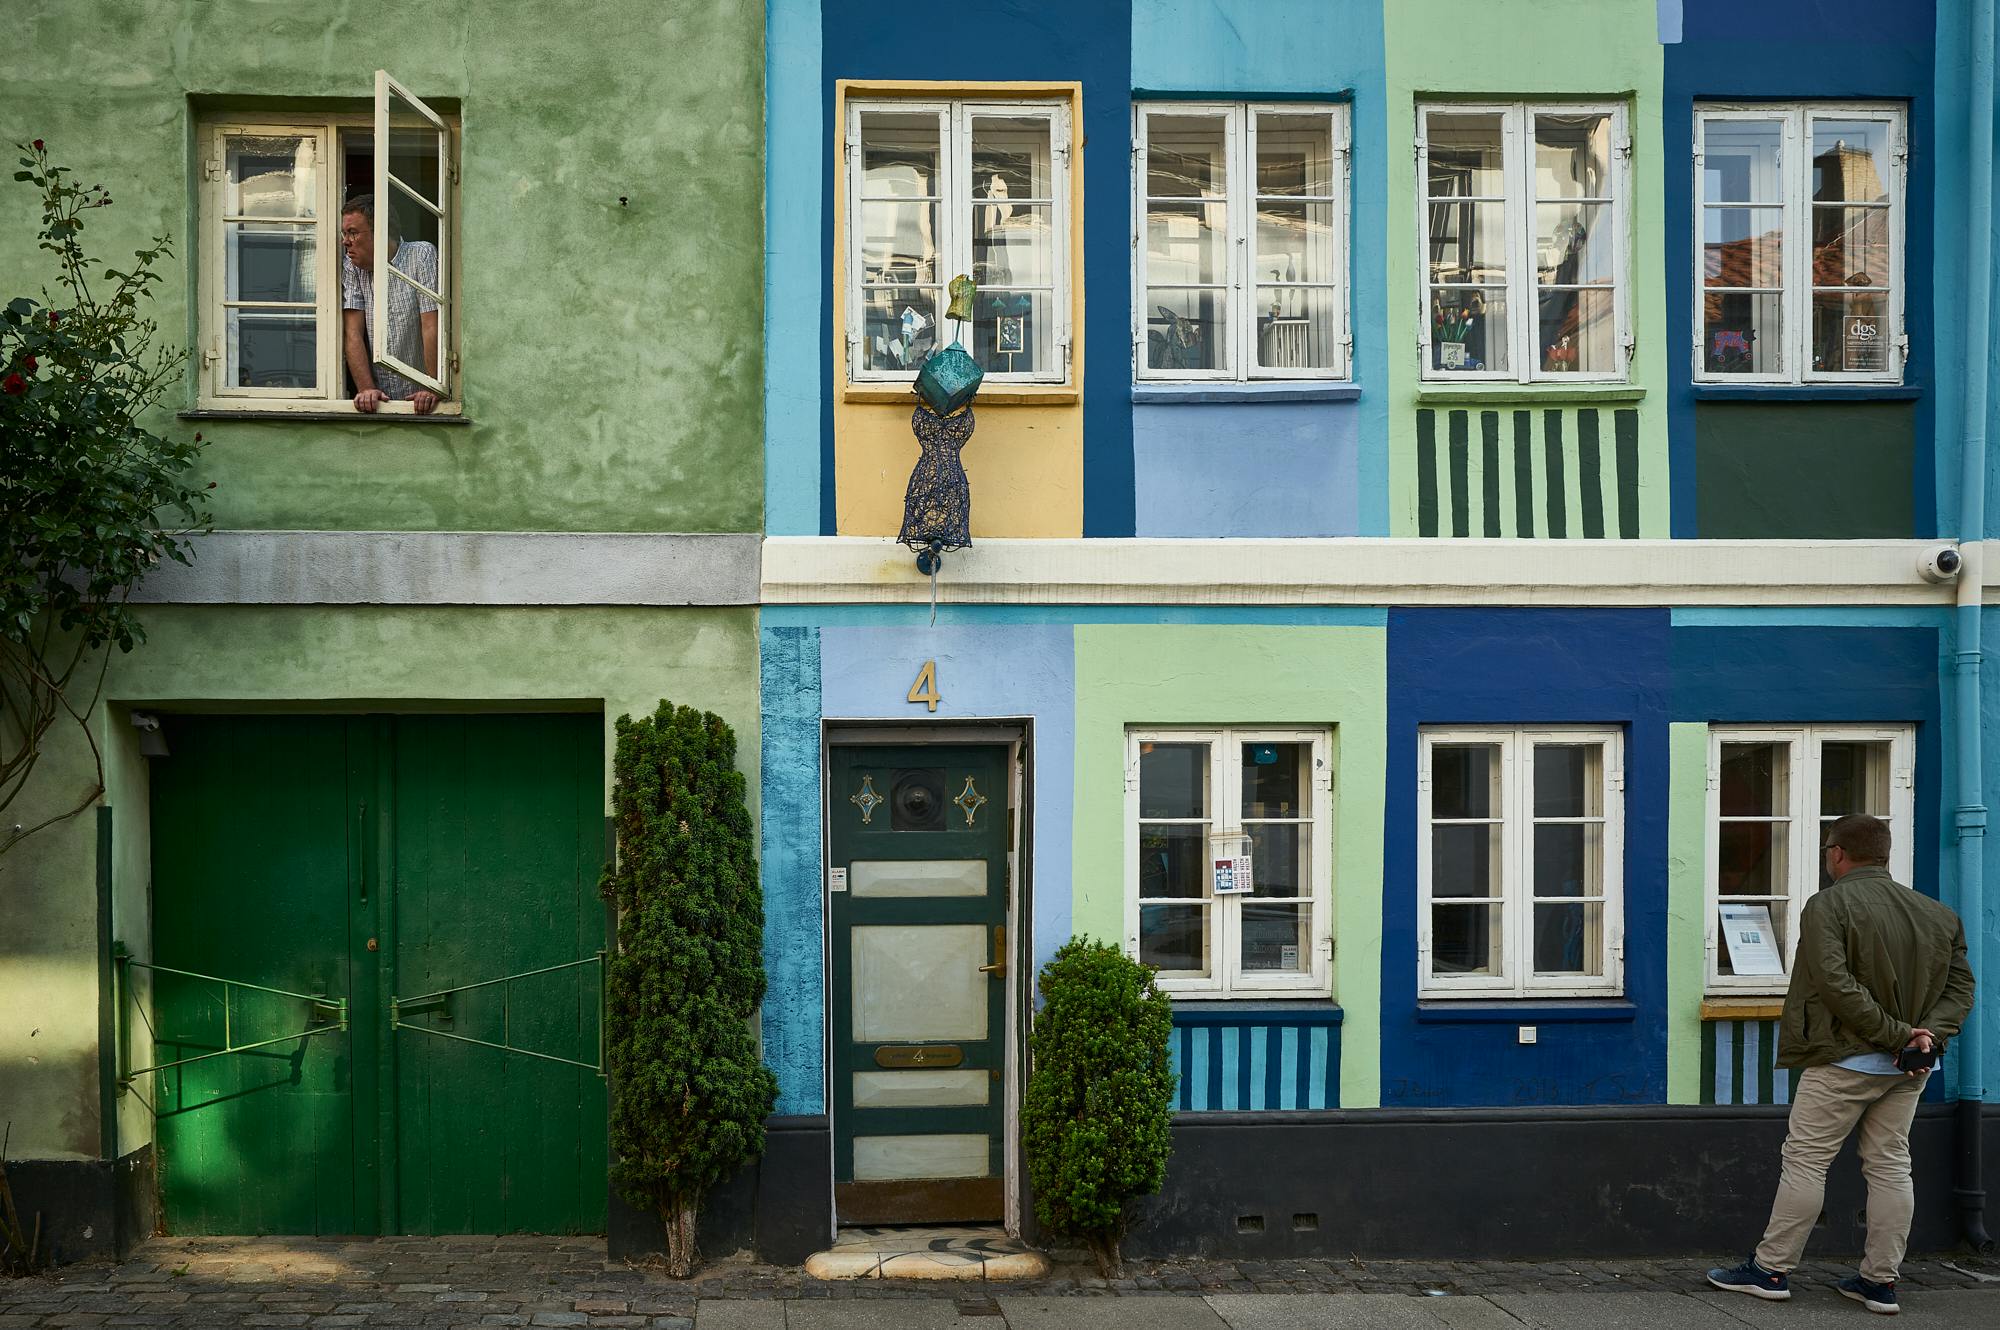 Capture the hidden gems of Copenhagen in a private photography tour